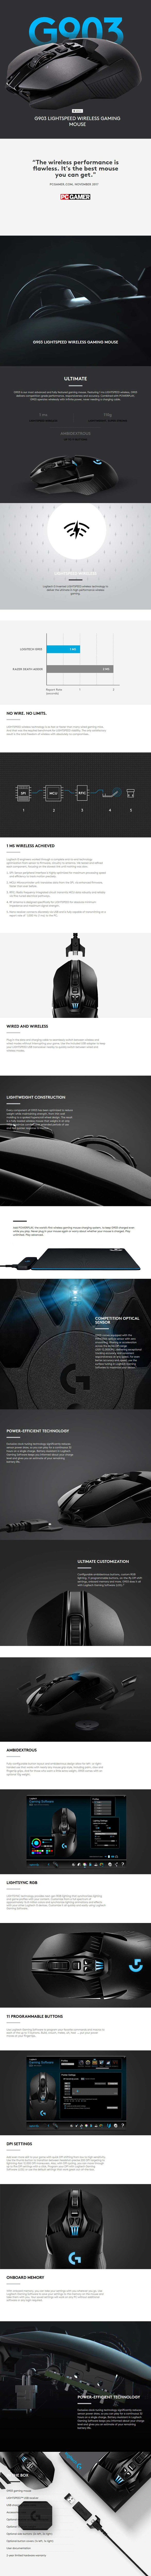 Logitech G903 Lightspeed Lag-free RGB Wireless Gaming Mouse 910-005087 Details